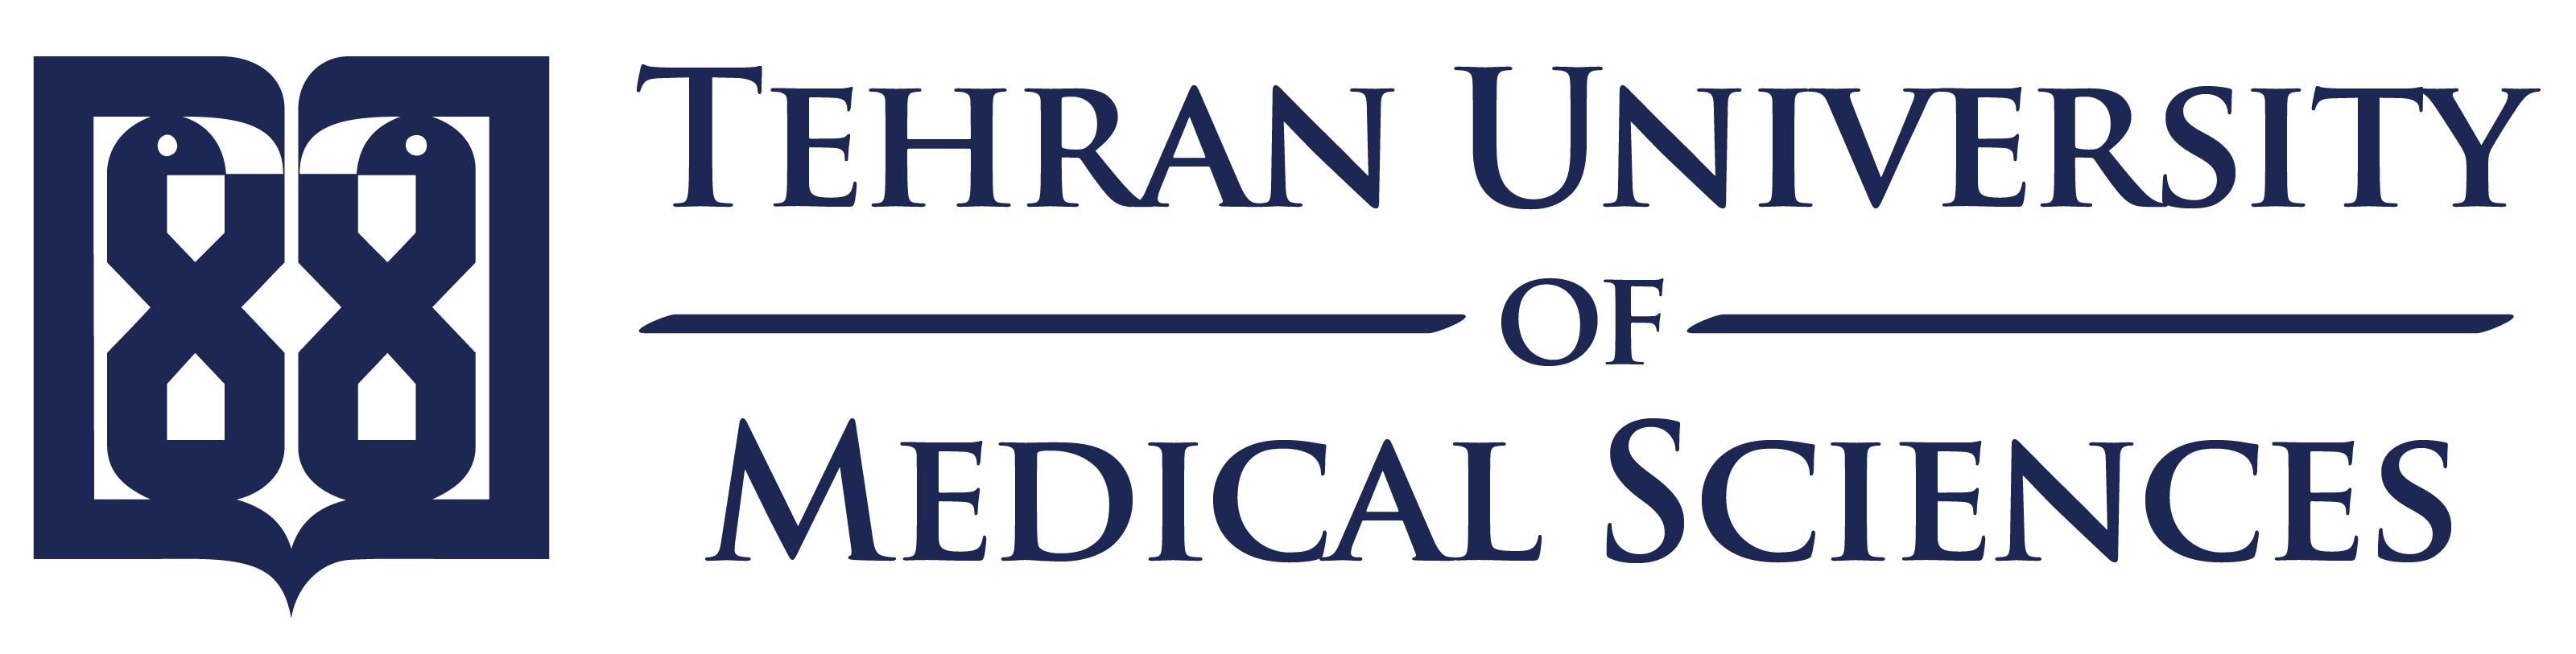 tehran university medical science